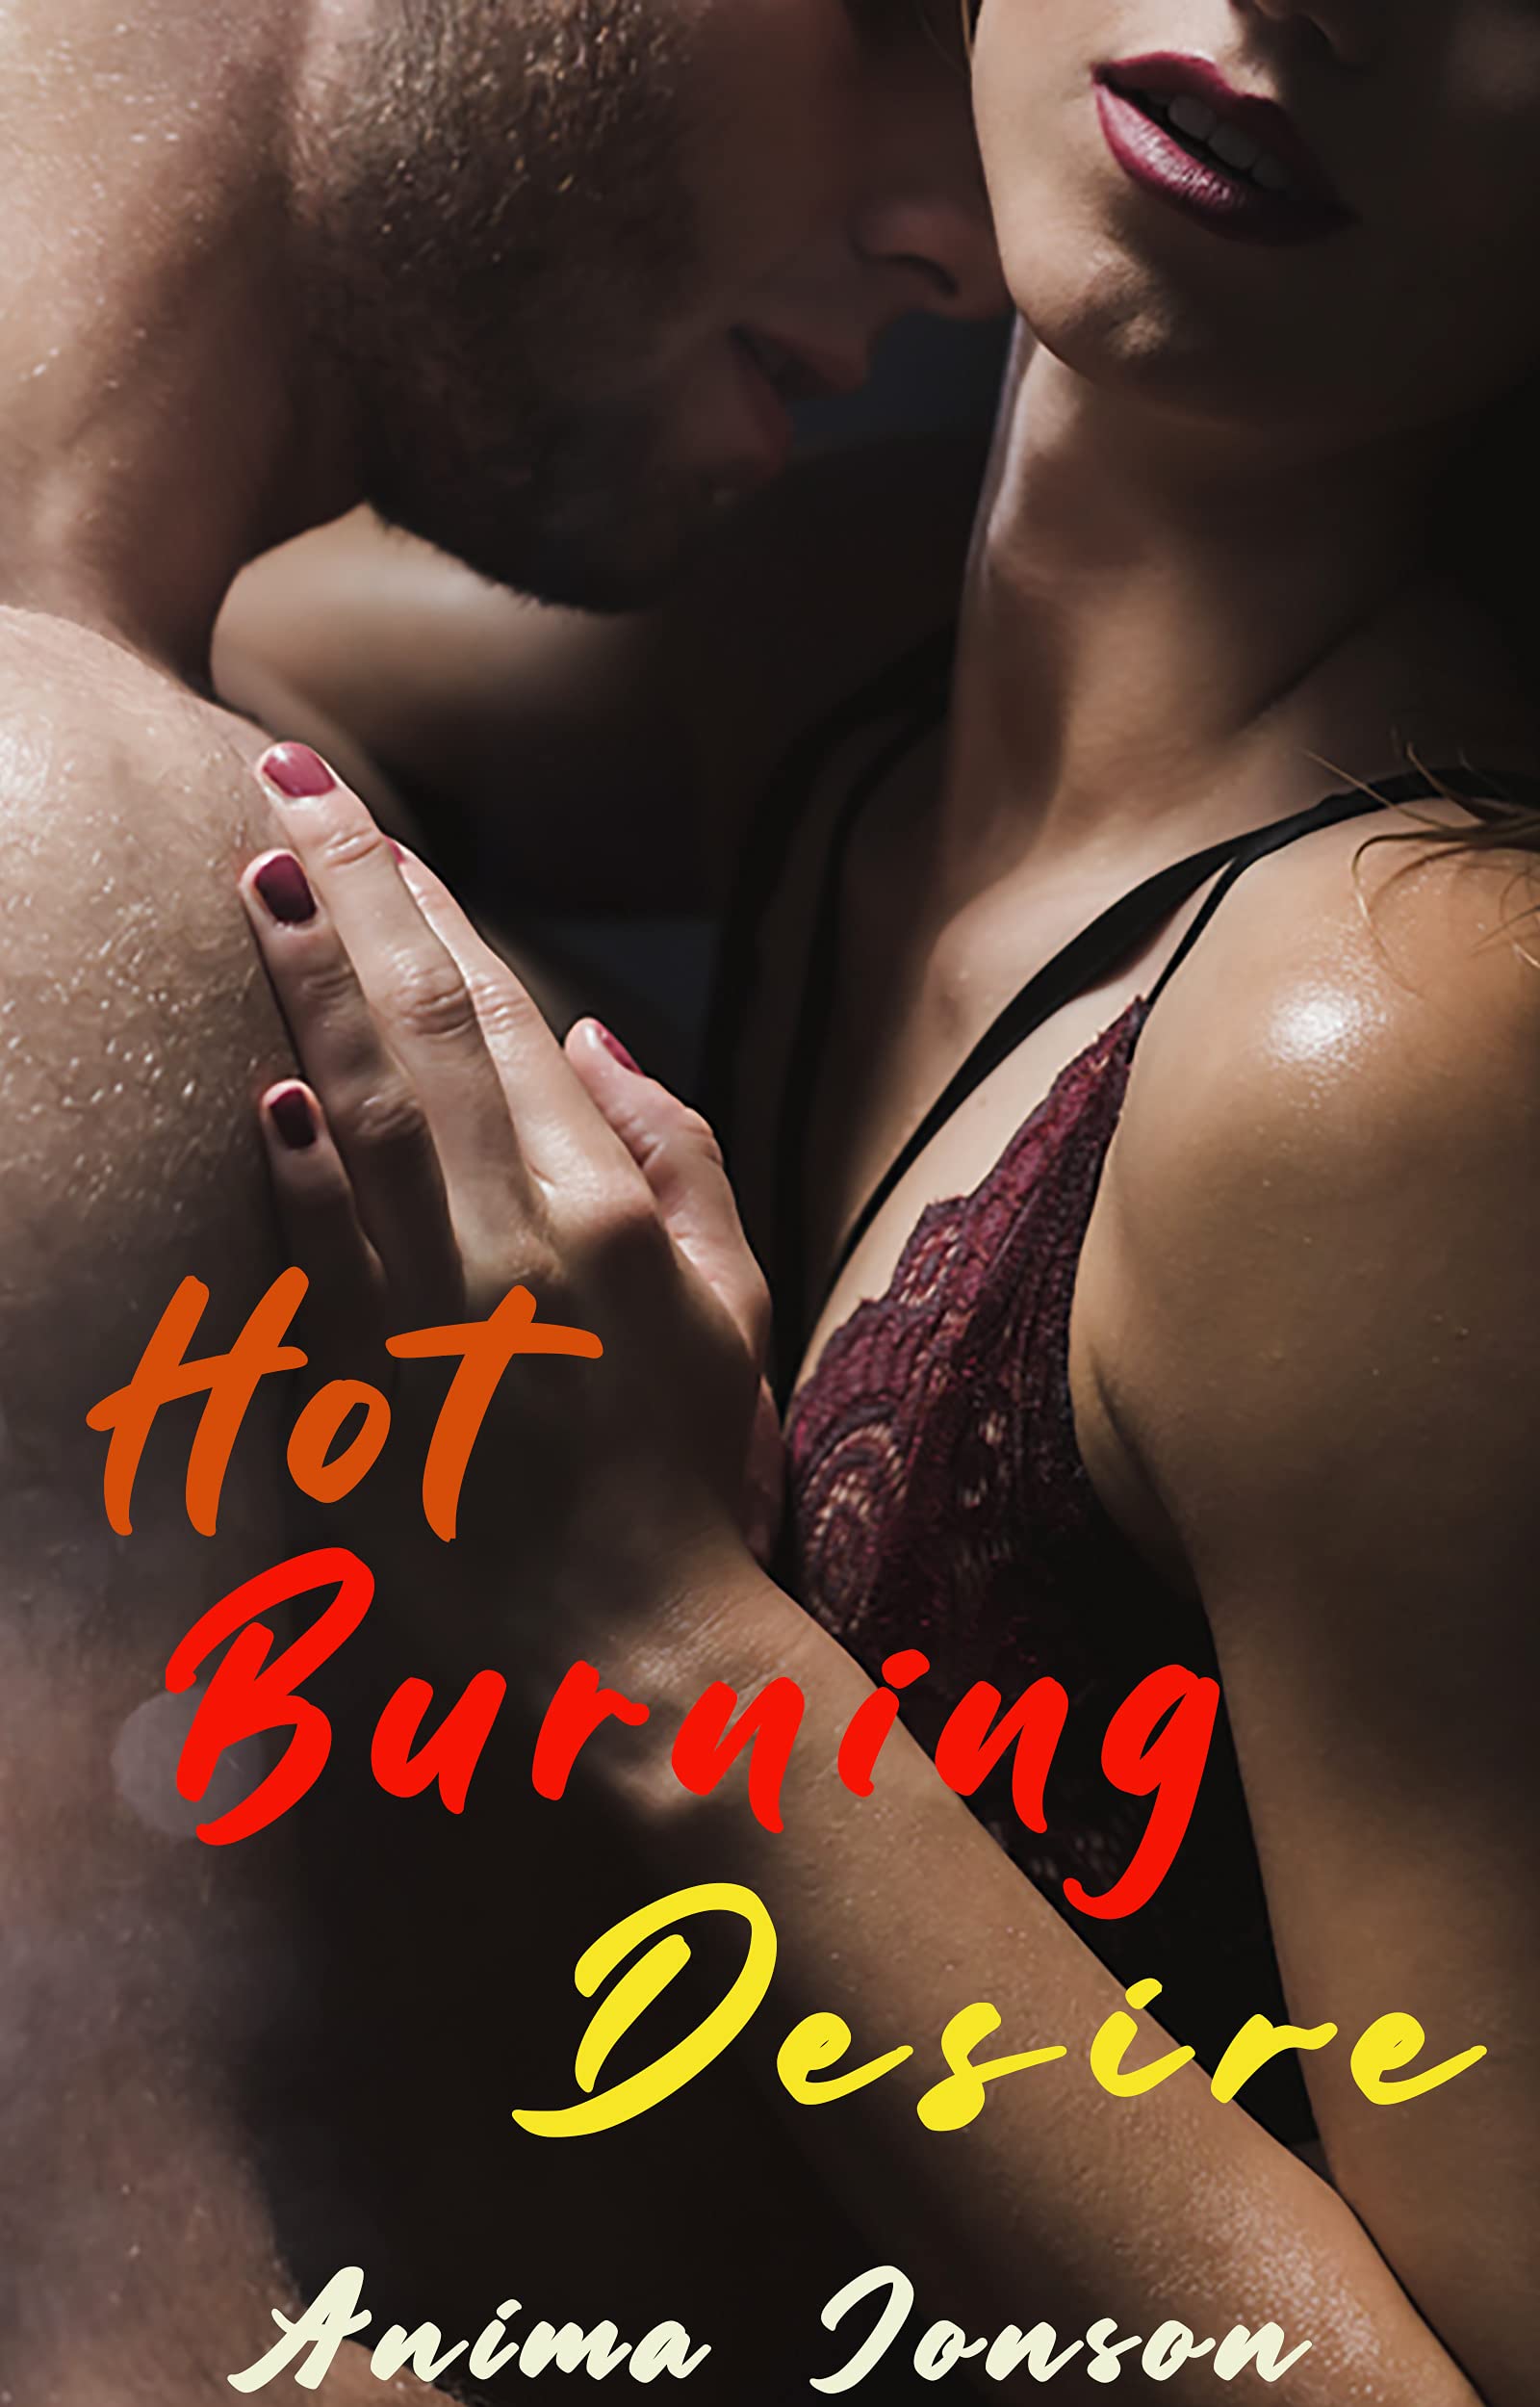 hot making love stories